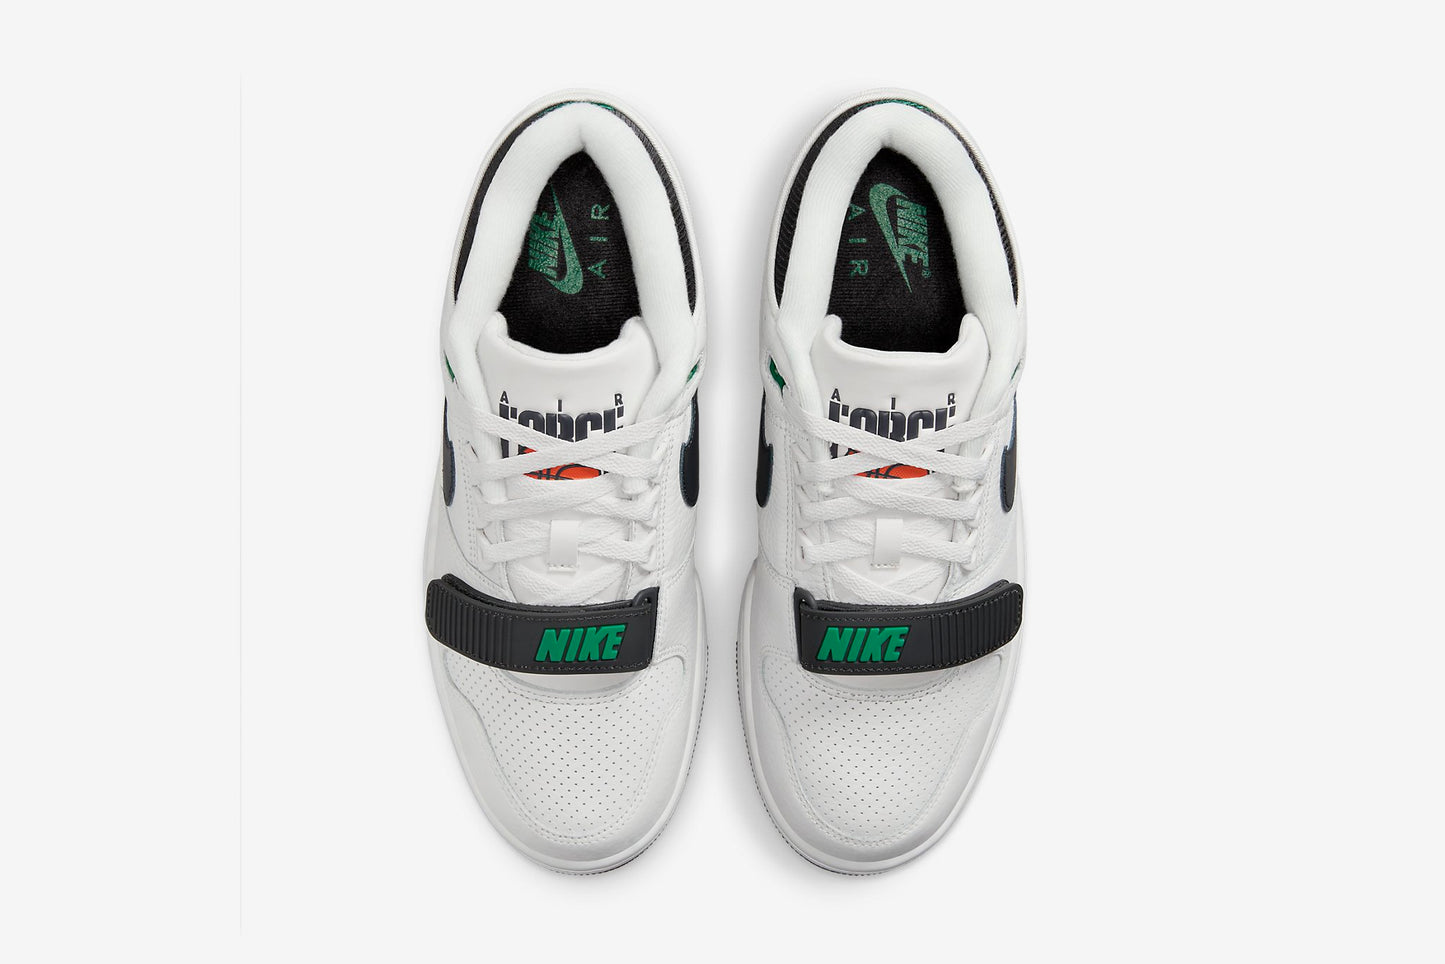 Nike "Air Alpha Force '88" M - Platinum Tint / Anthracite